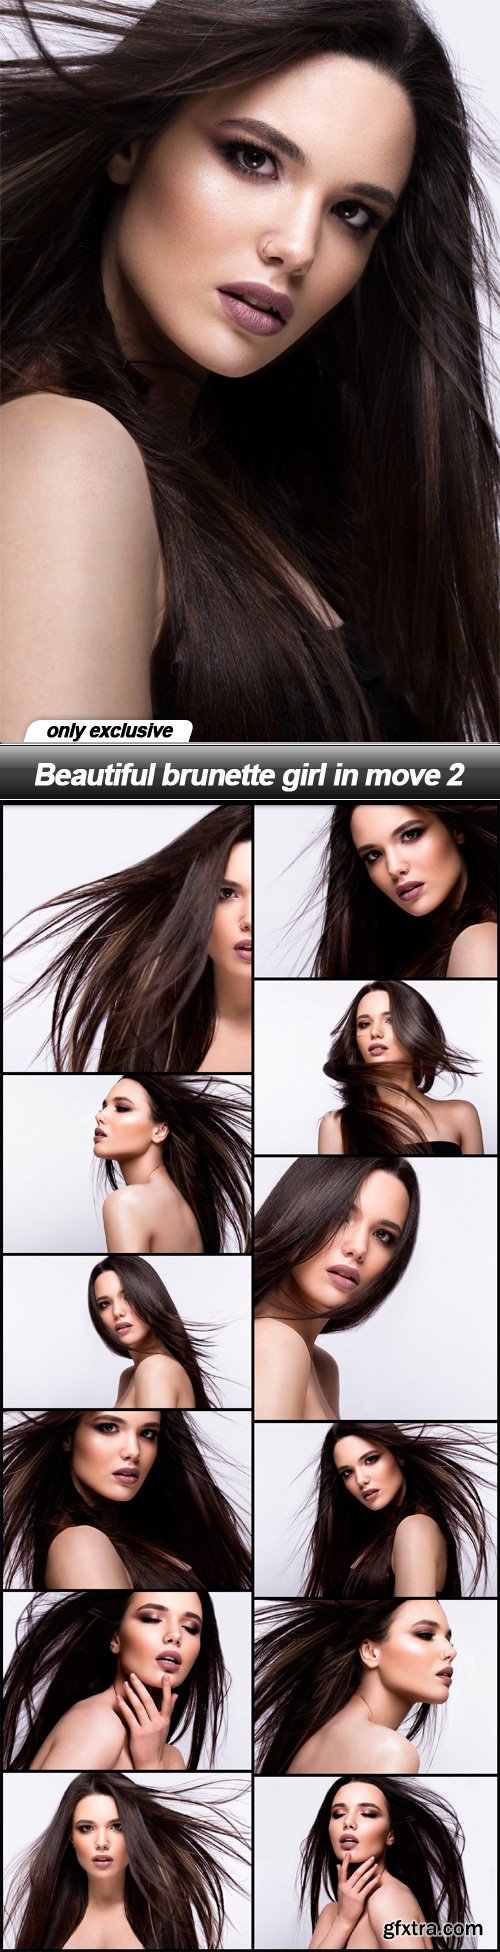 Beautiful brunette girl in move 2 - 13 UHQ JPEG